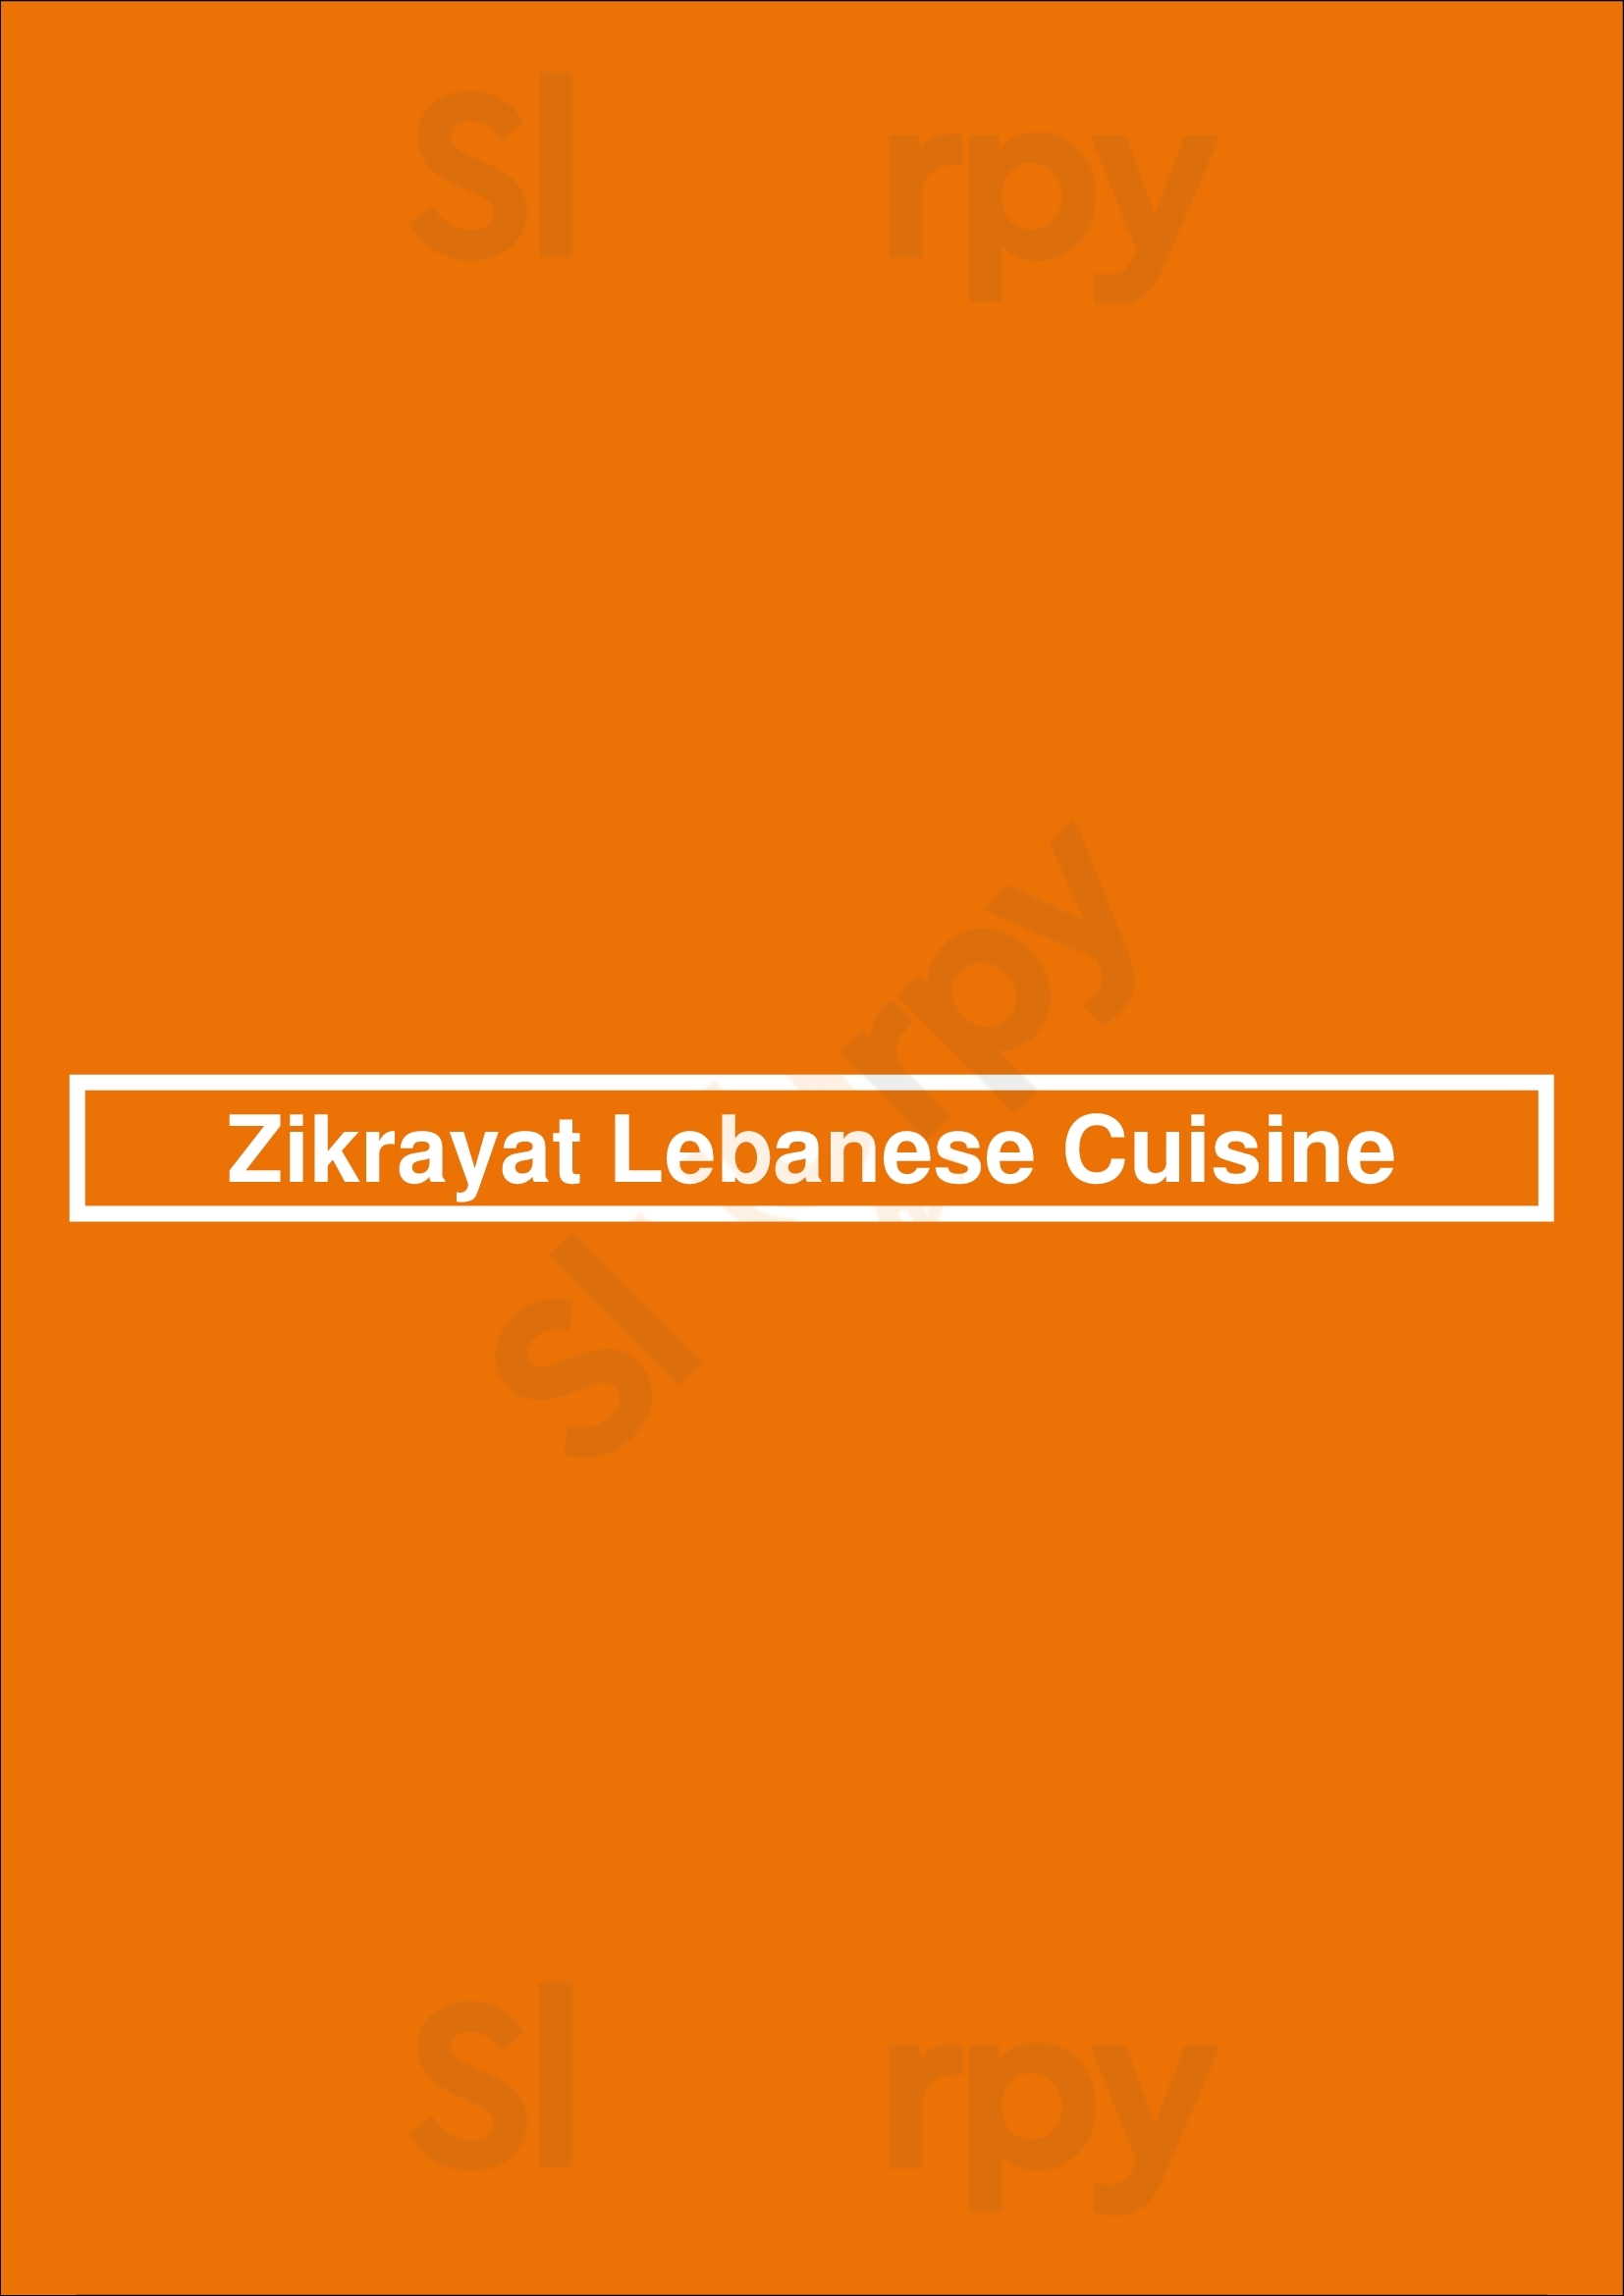 Zikrayat Lebanese Cuisine Malvern Menu - 1